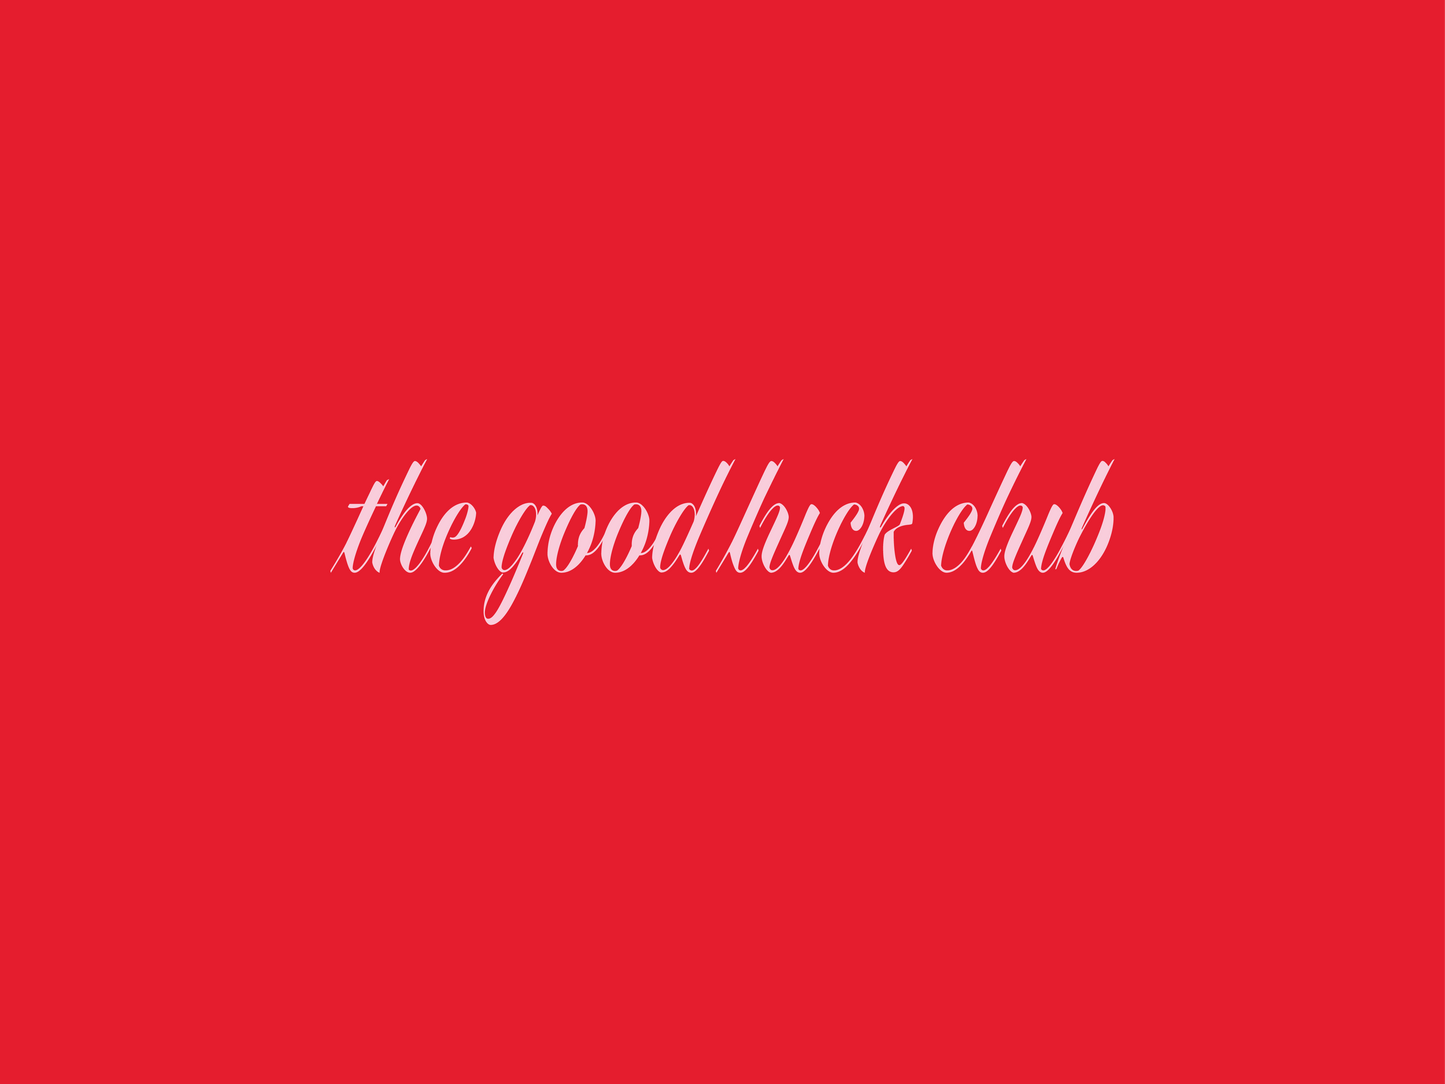 The Good Luck Club Membership